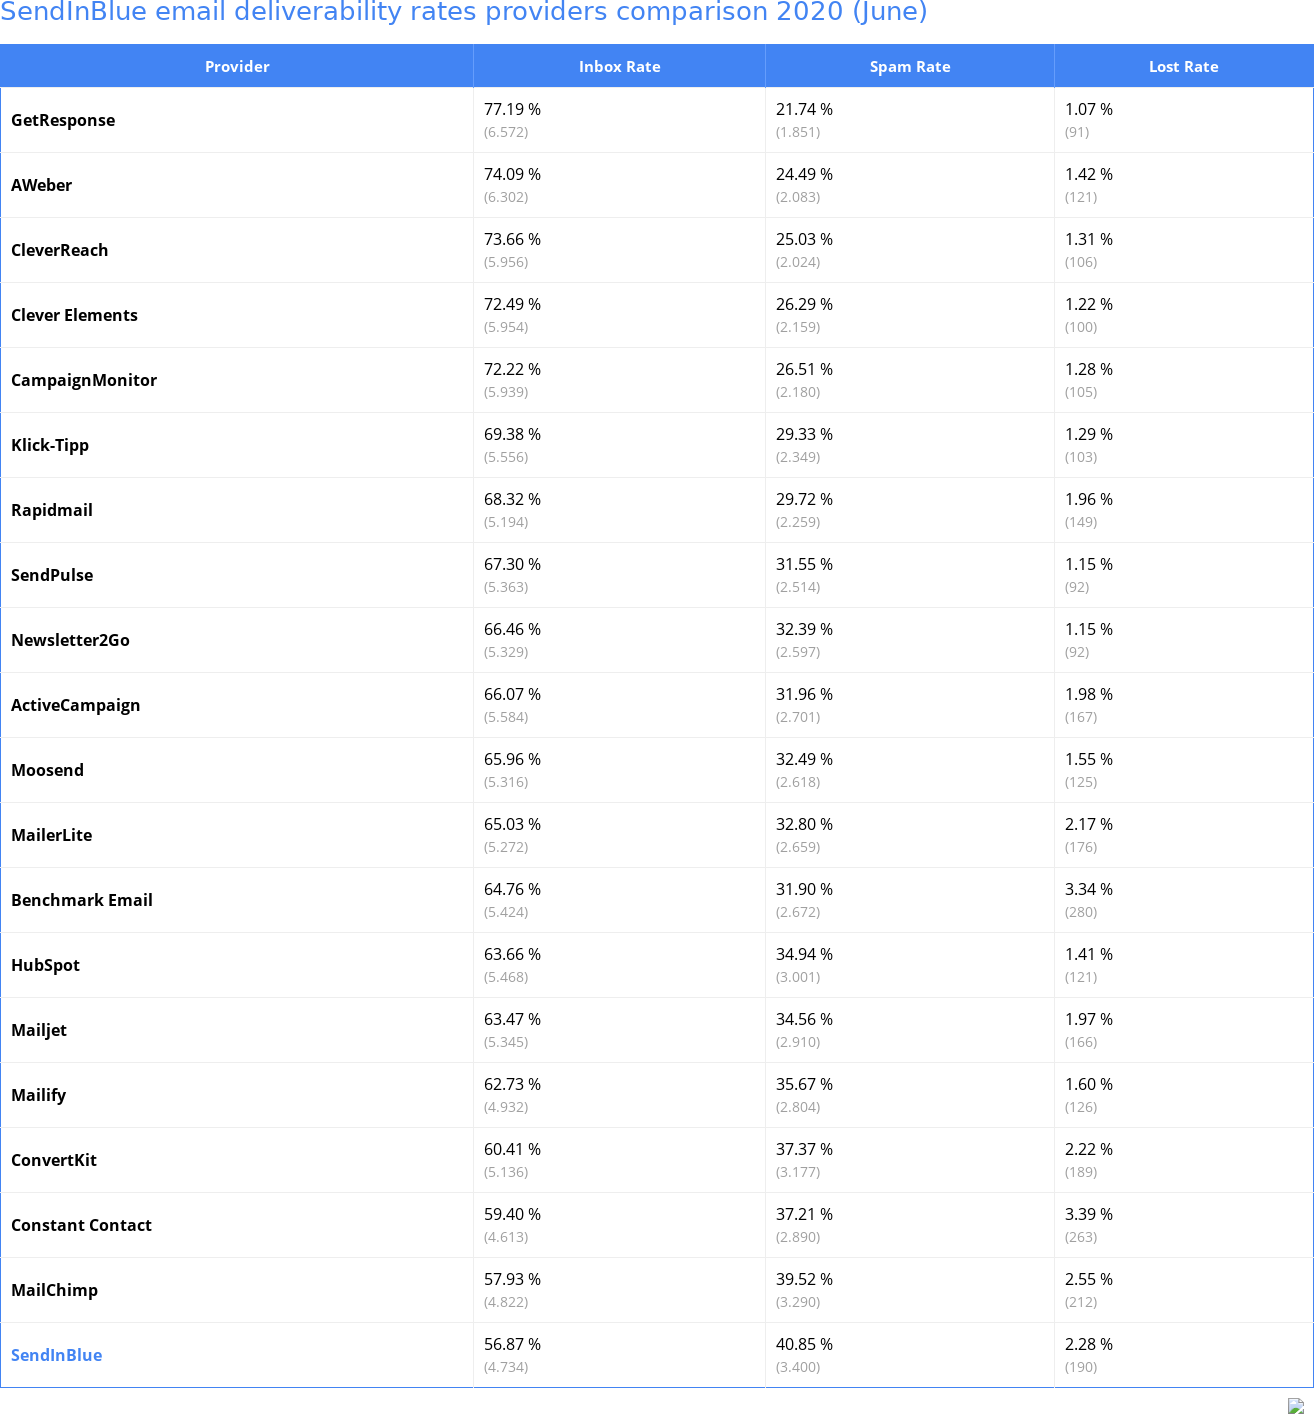 SendInBlue email deliverability rates providers comparison 2020 (June)